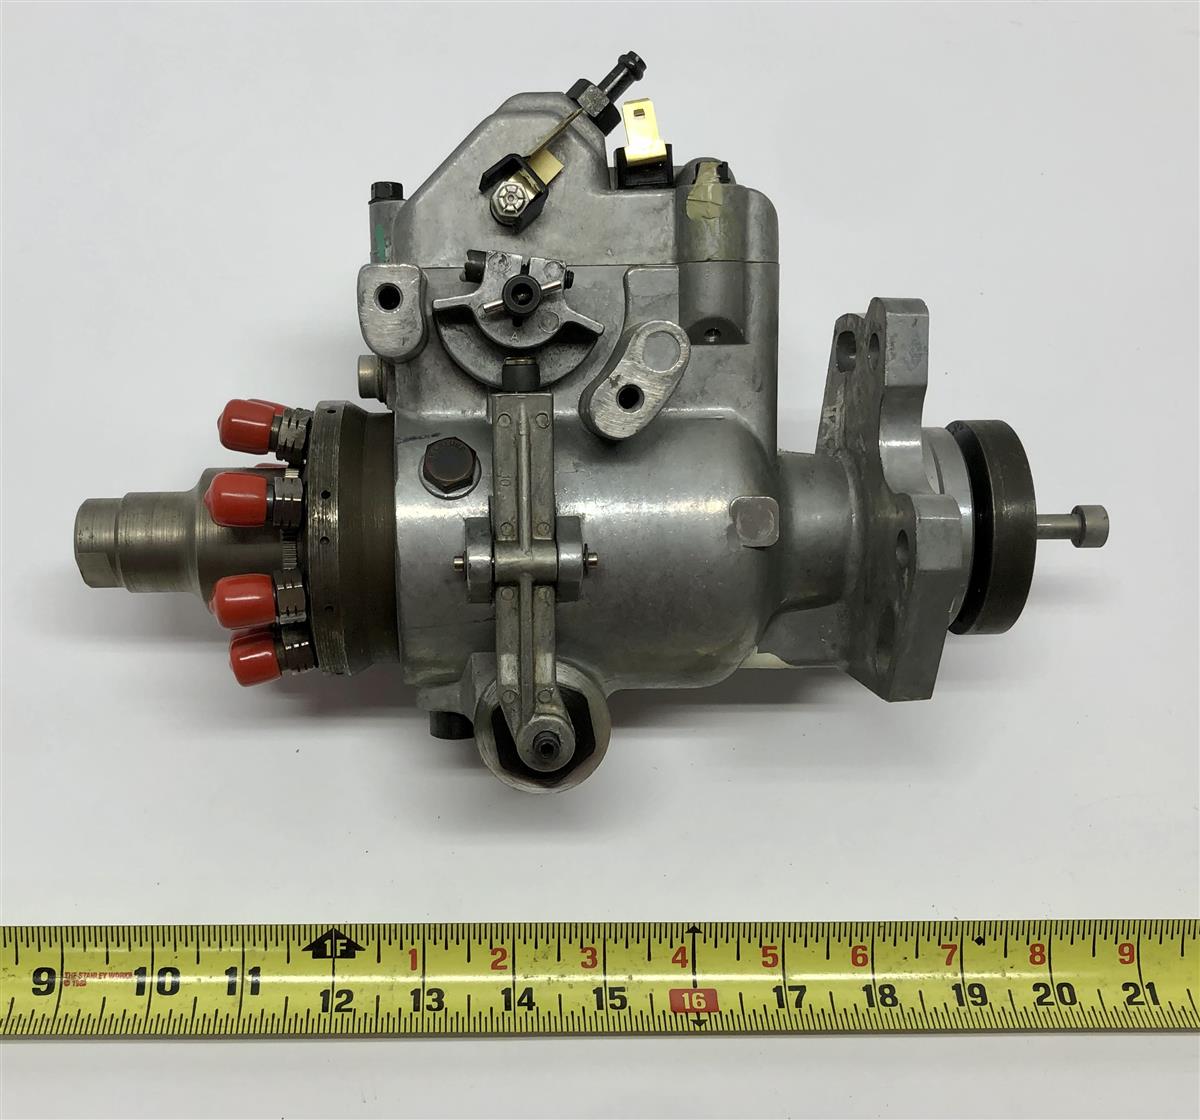 SP-2904 | SP-2904 Fuel Injection Pump 6.2 Liter Diesel CUCV (1).jpeg